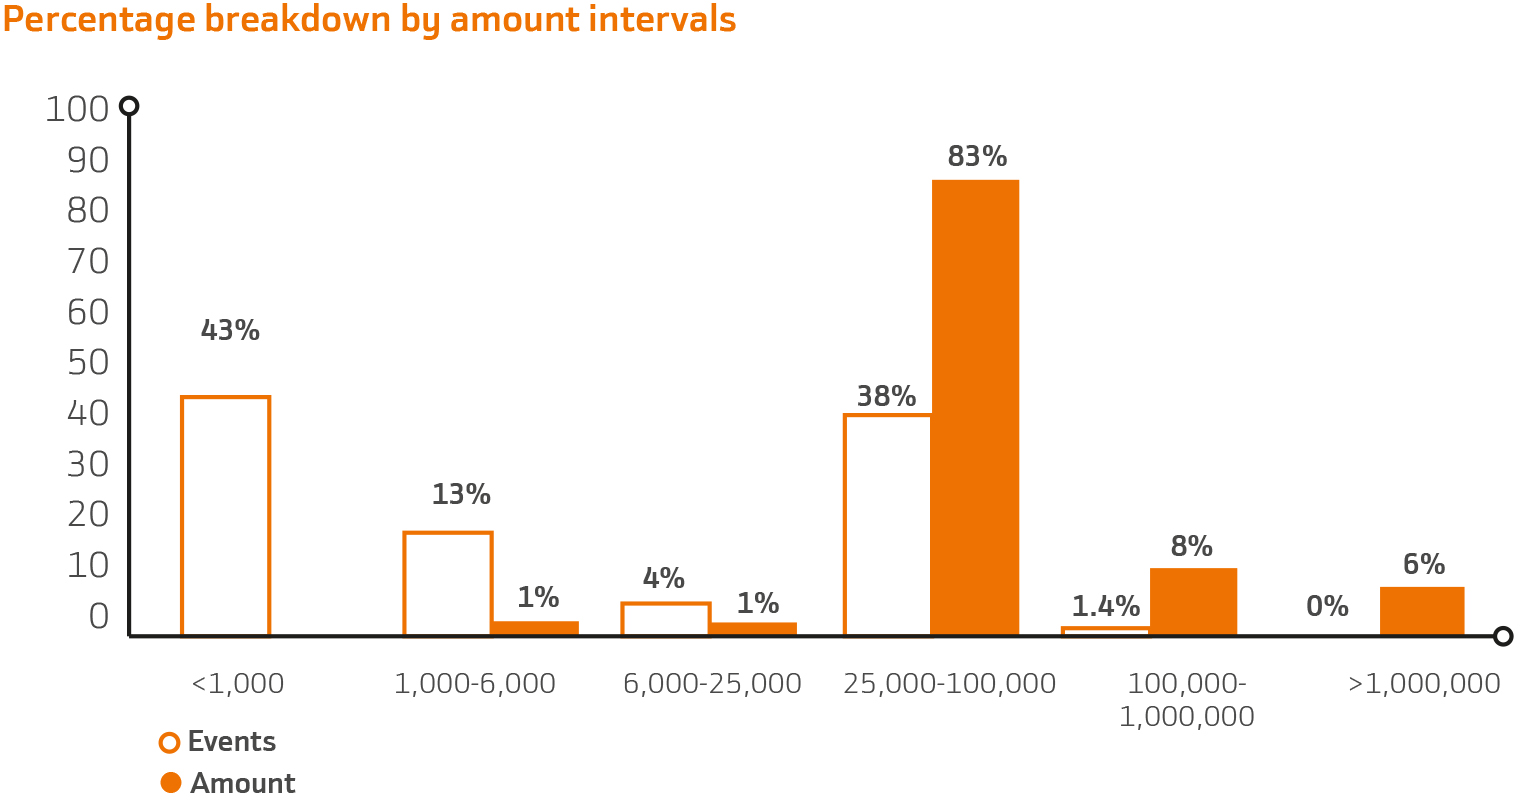 Percentage breakdown by amount intervals